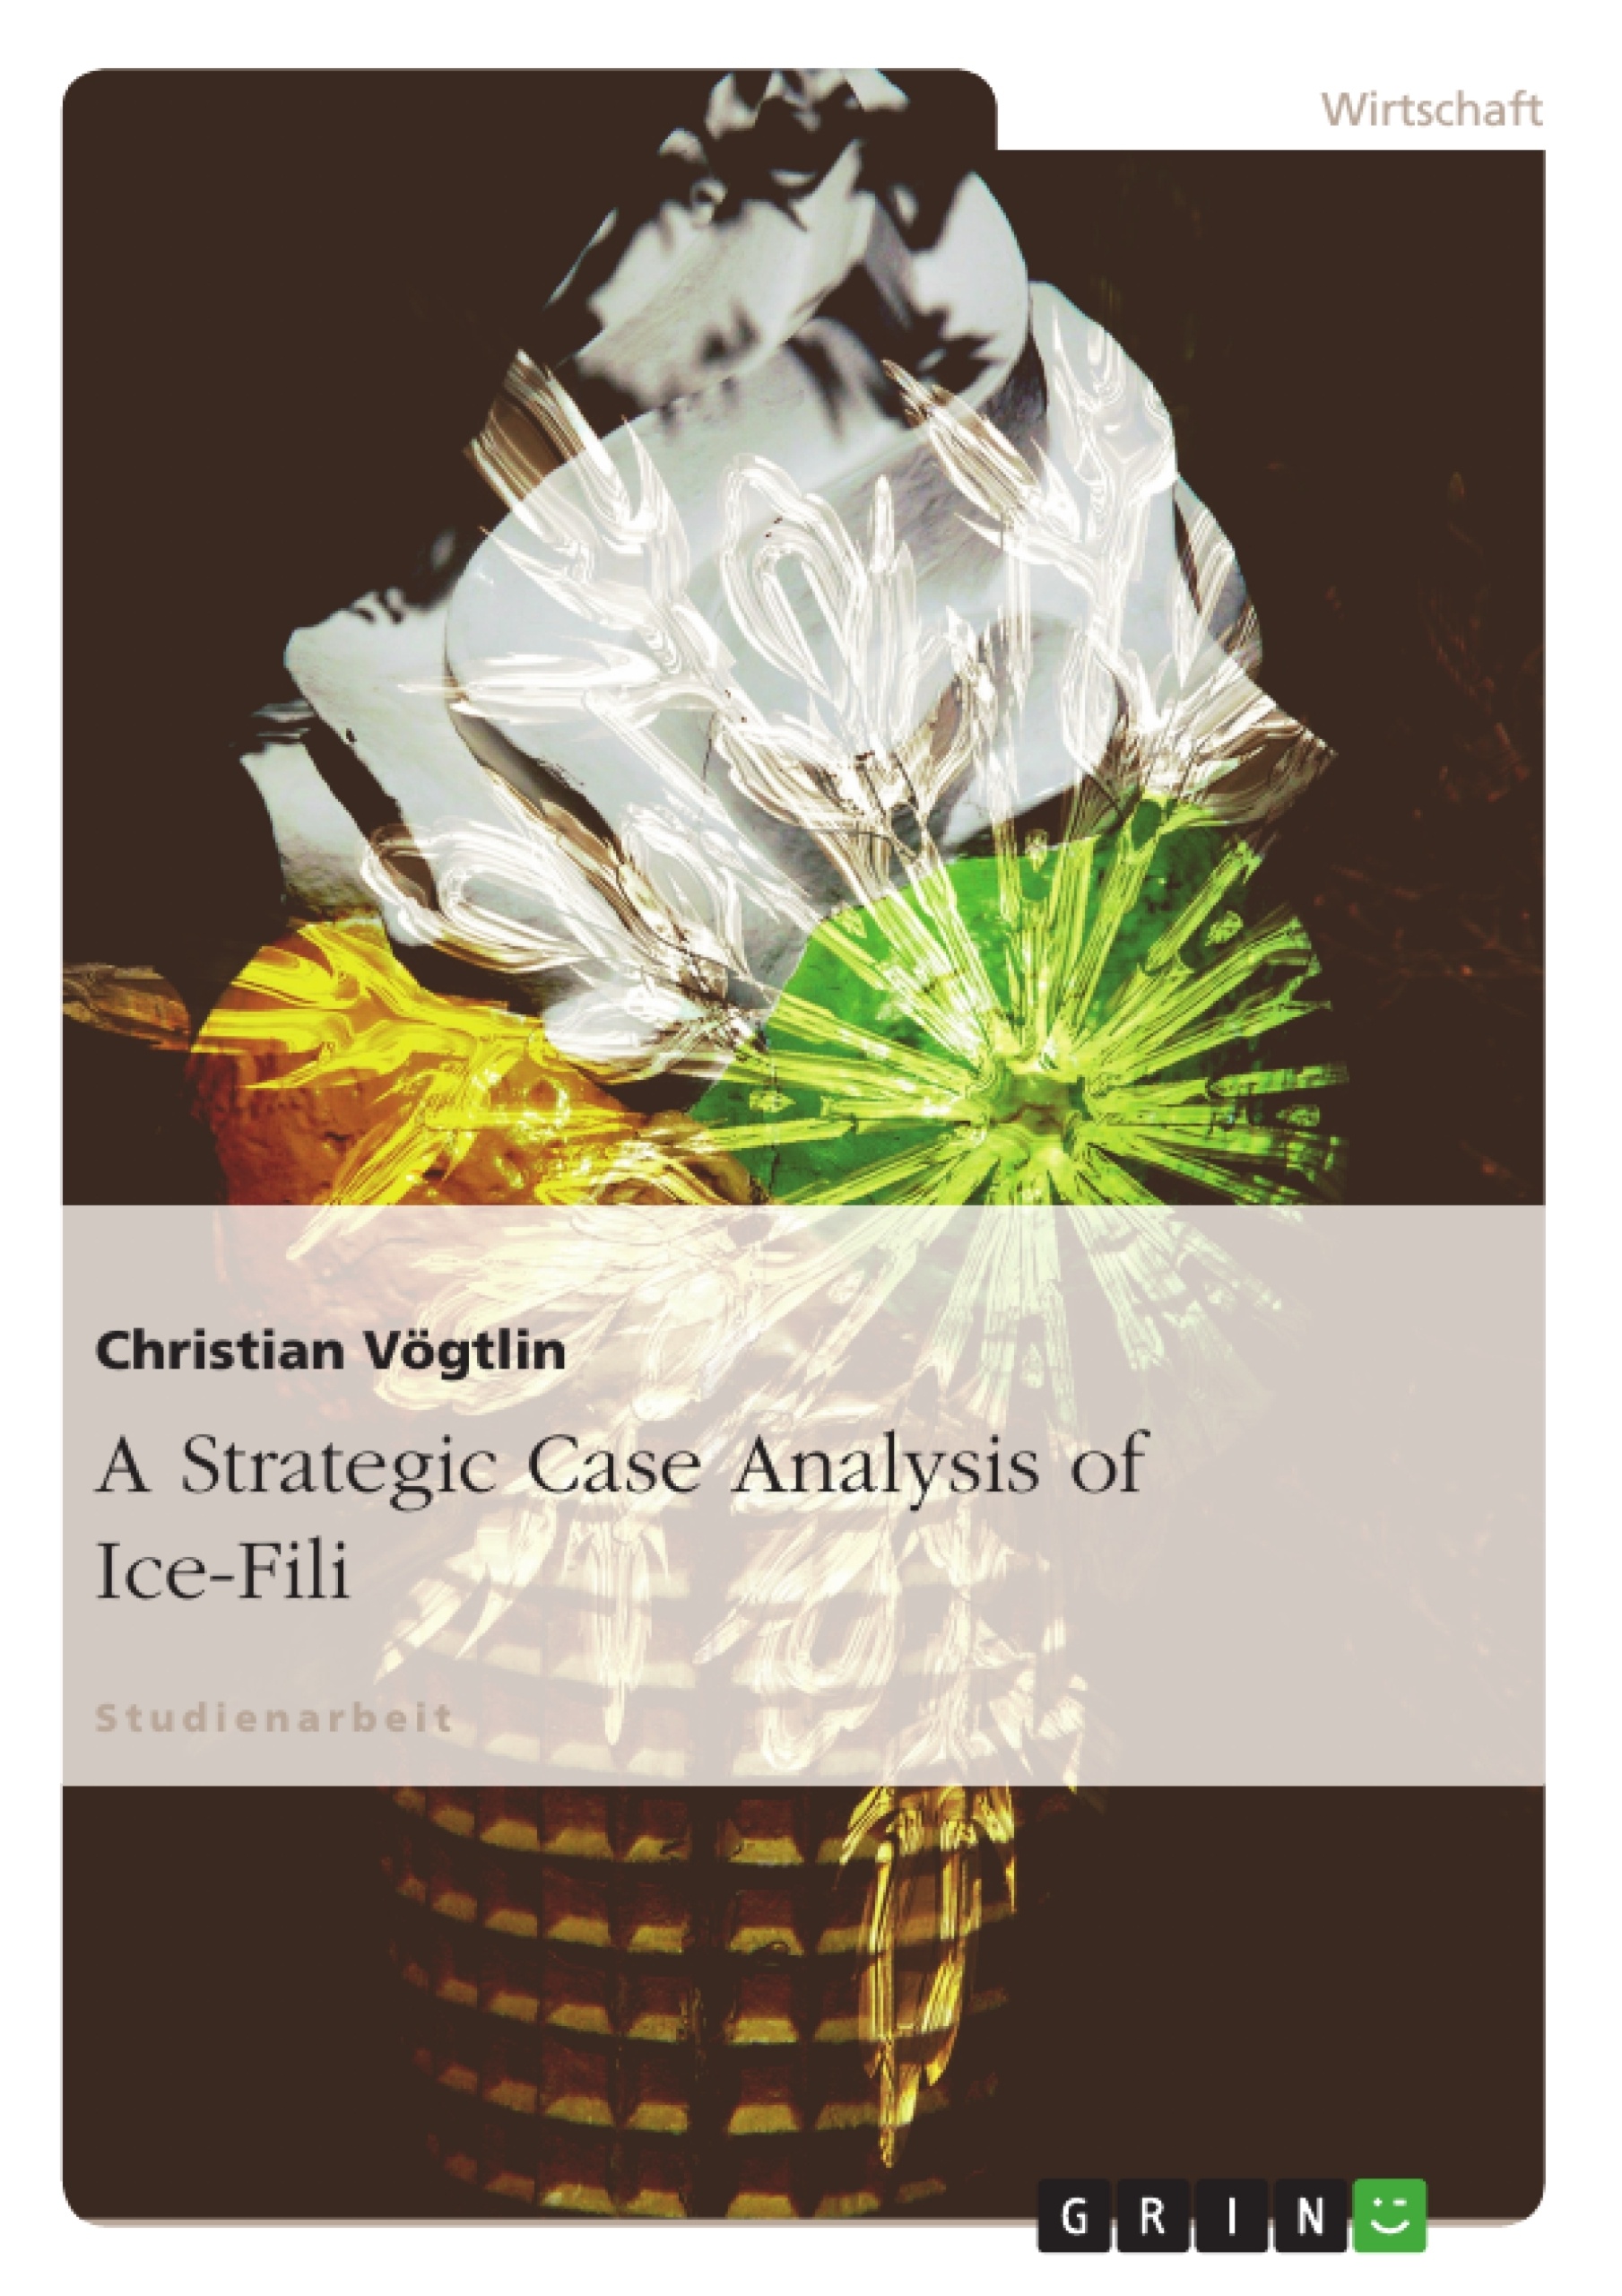 Title: A Strategic Case Analysis of Ice-Fili